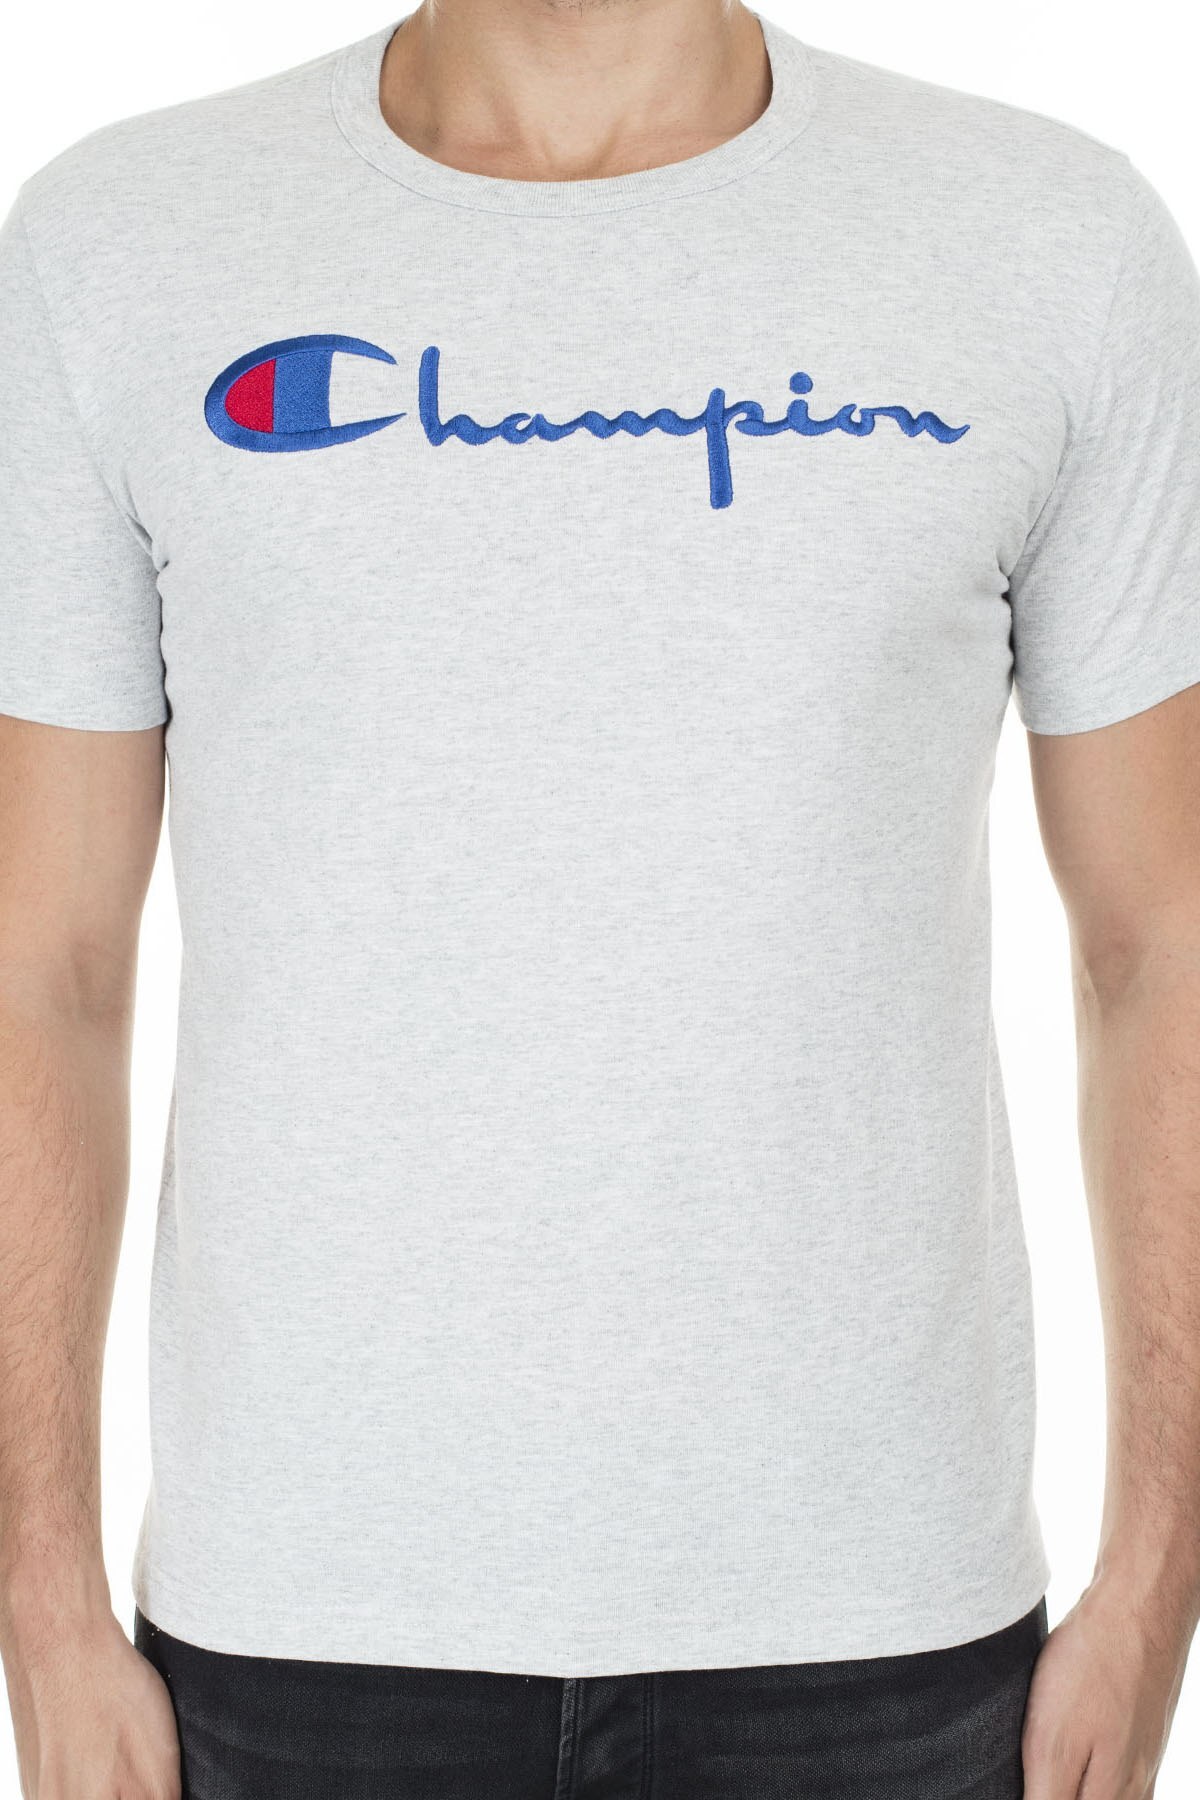 Champion İşlemeli Yazı Logolu Bisiklet Yaka Erkek T Shirt 210972 EM004 LOXGM AÇIK GRİ